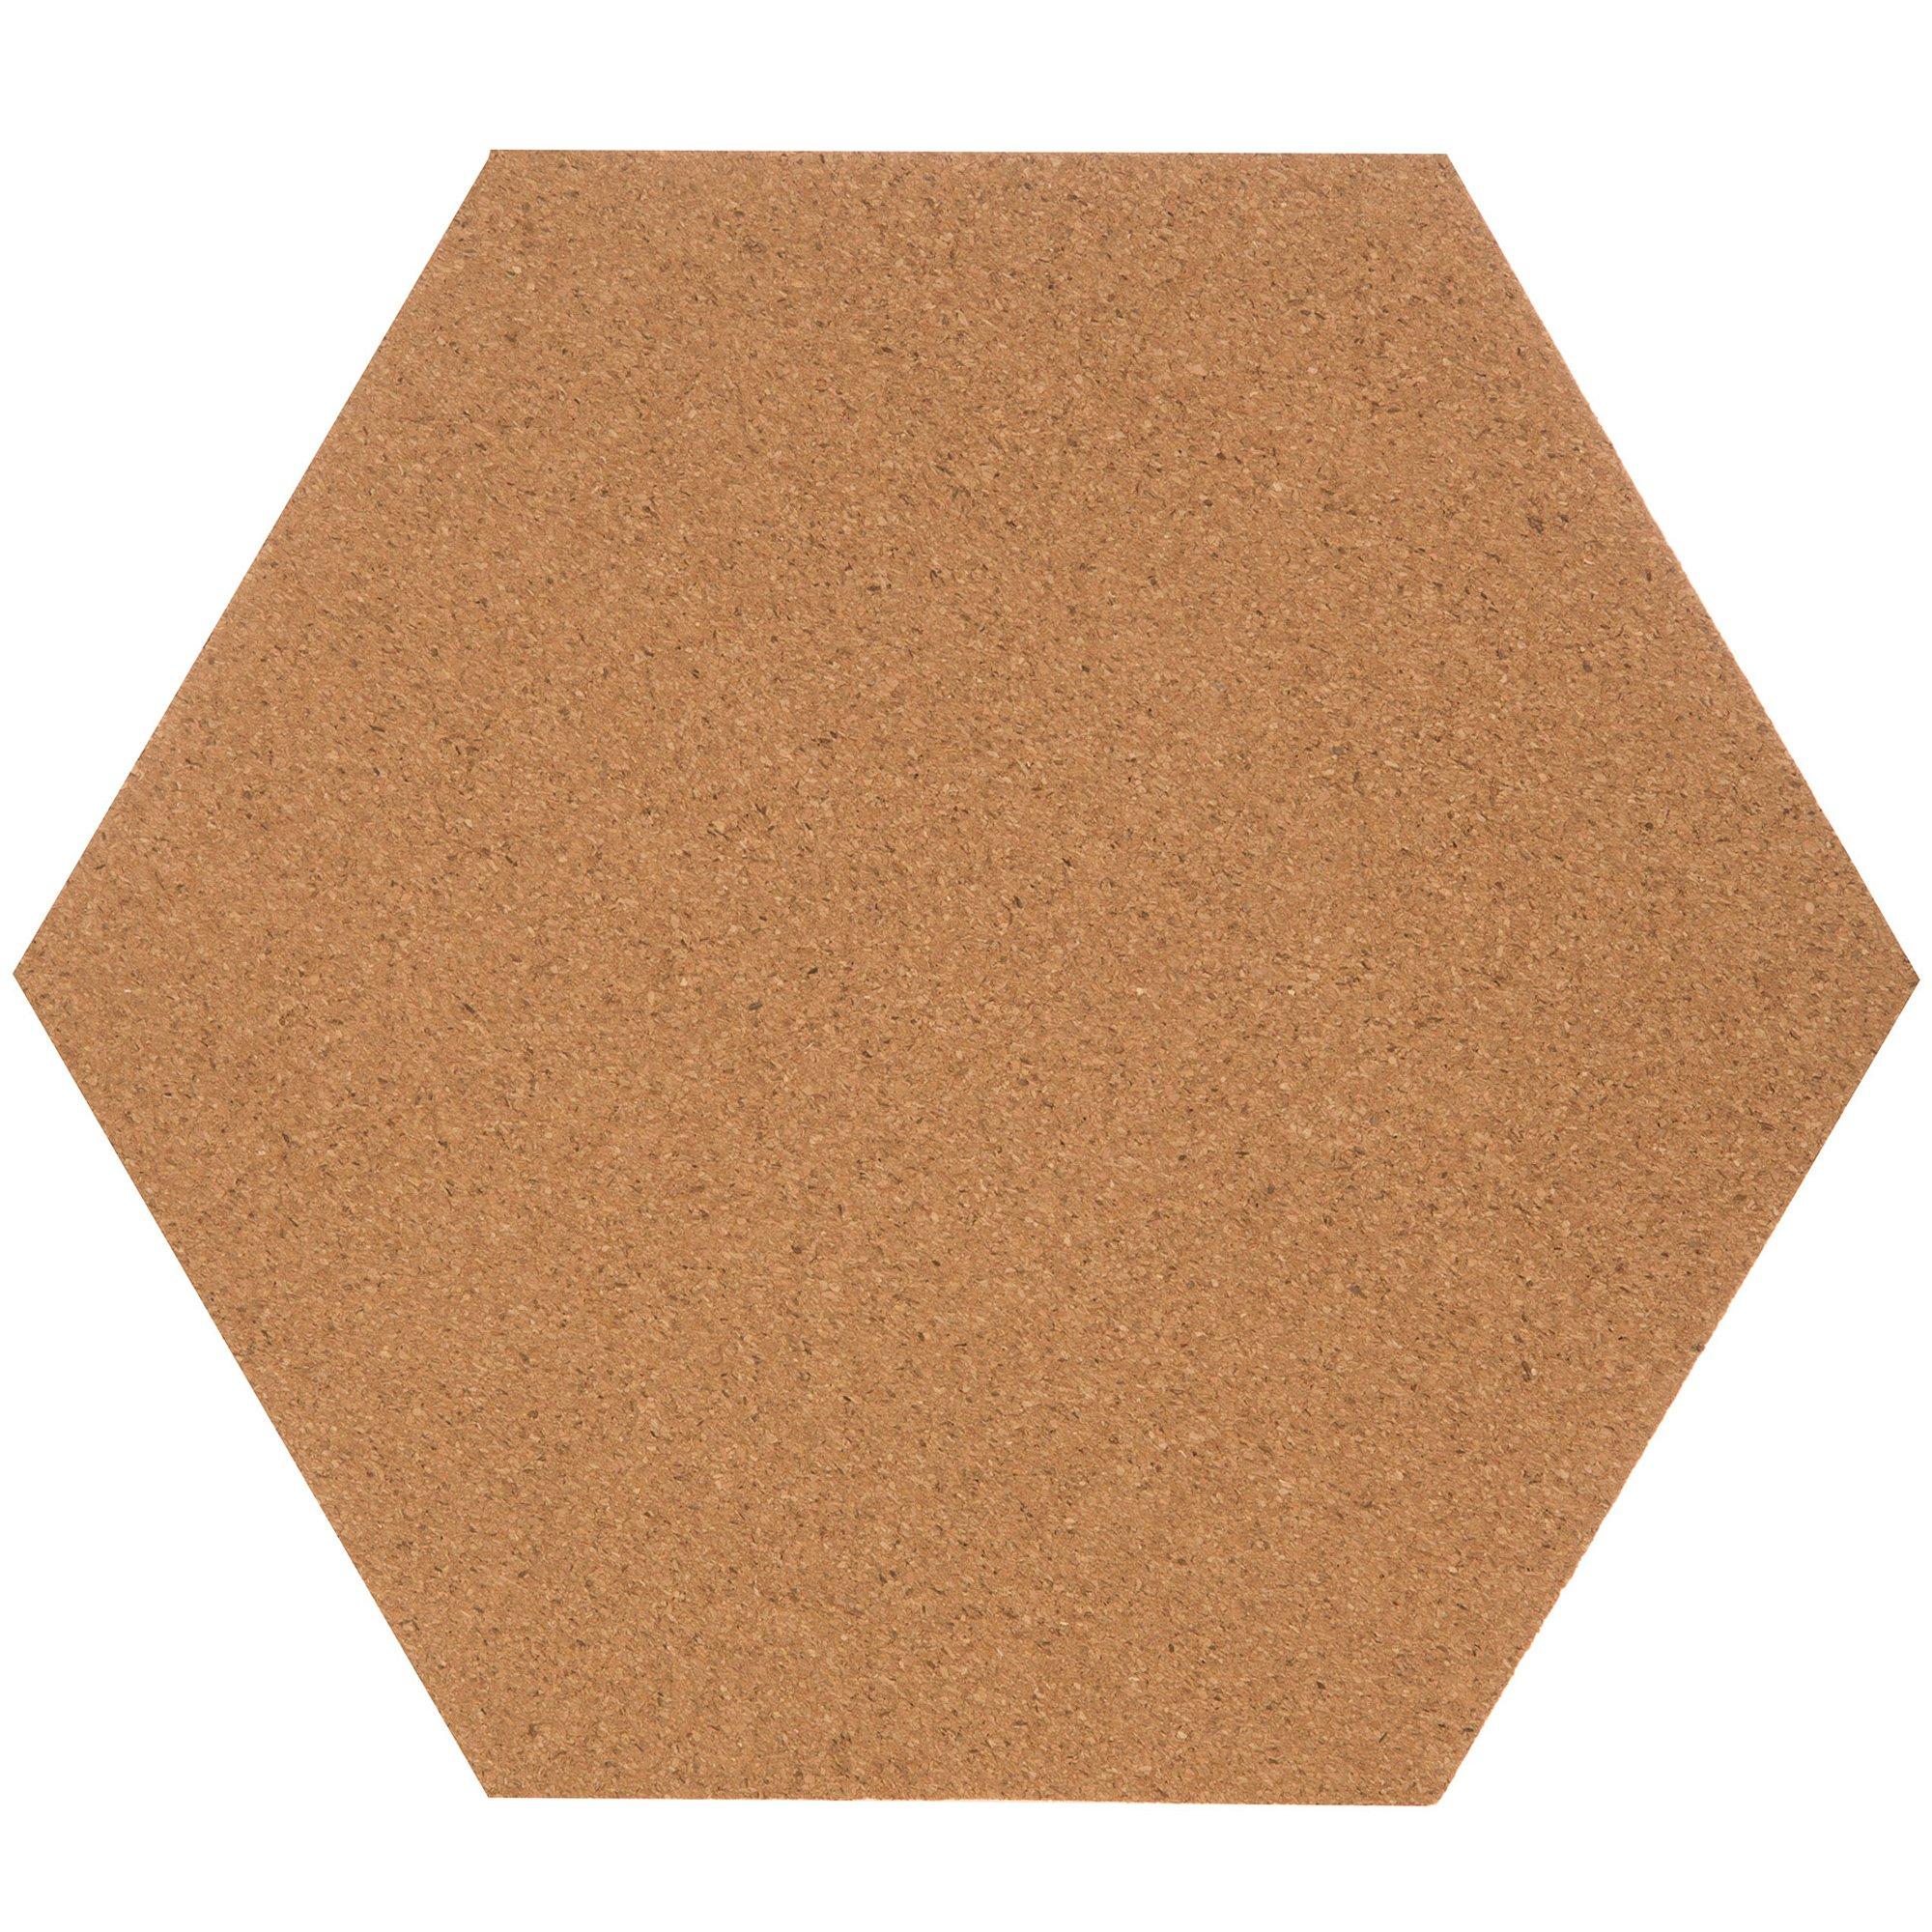 53218.01 Navaris Hexagon Cork Board Tiles (Set of 10) - Self